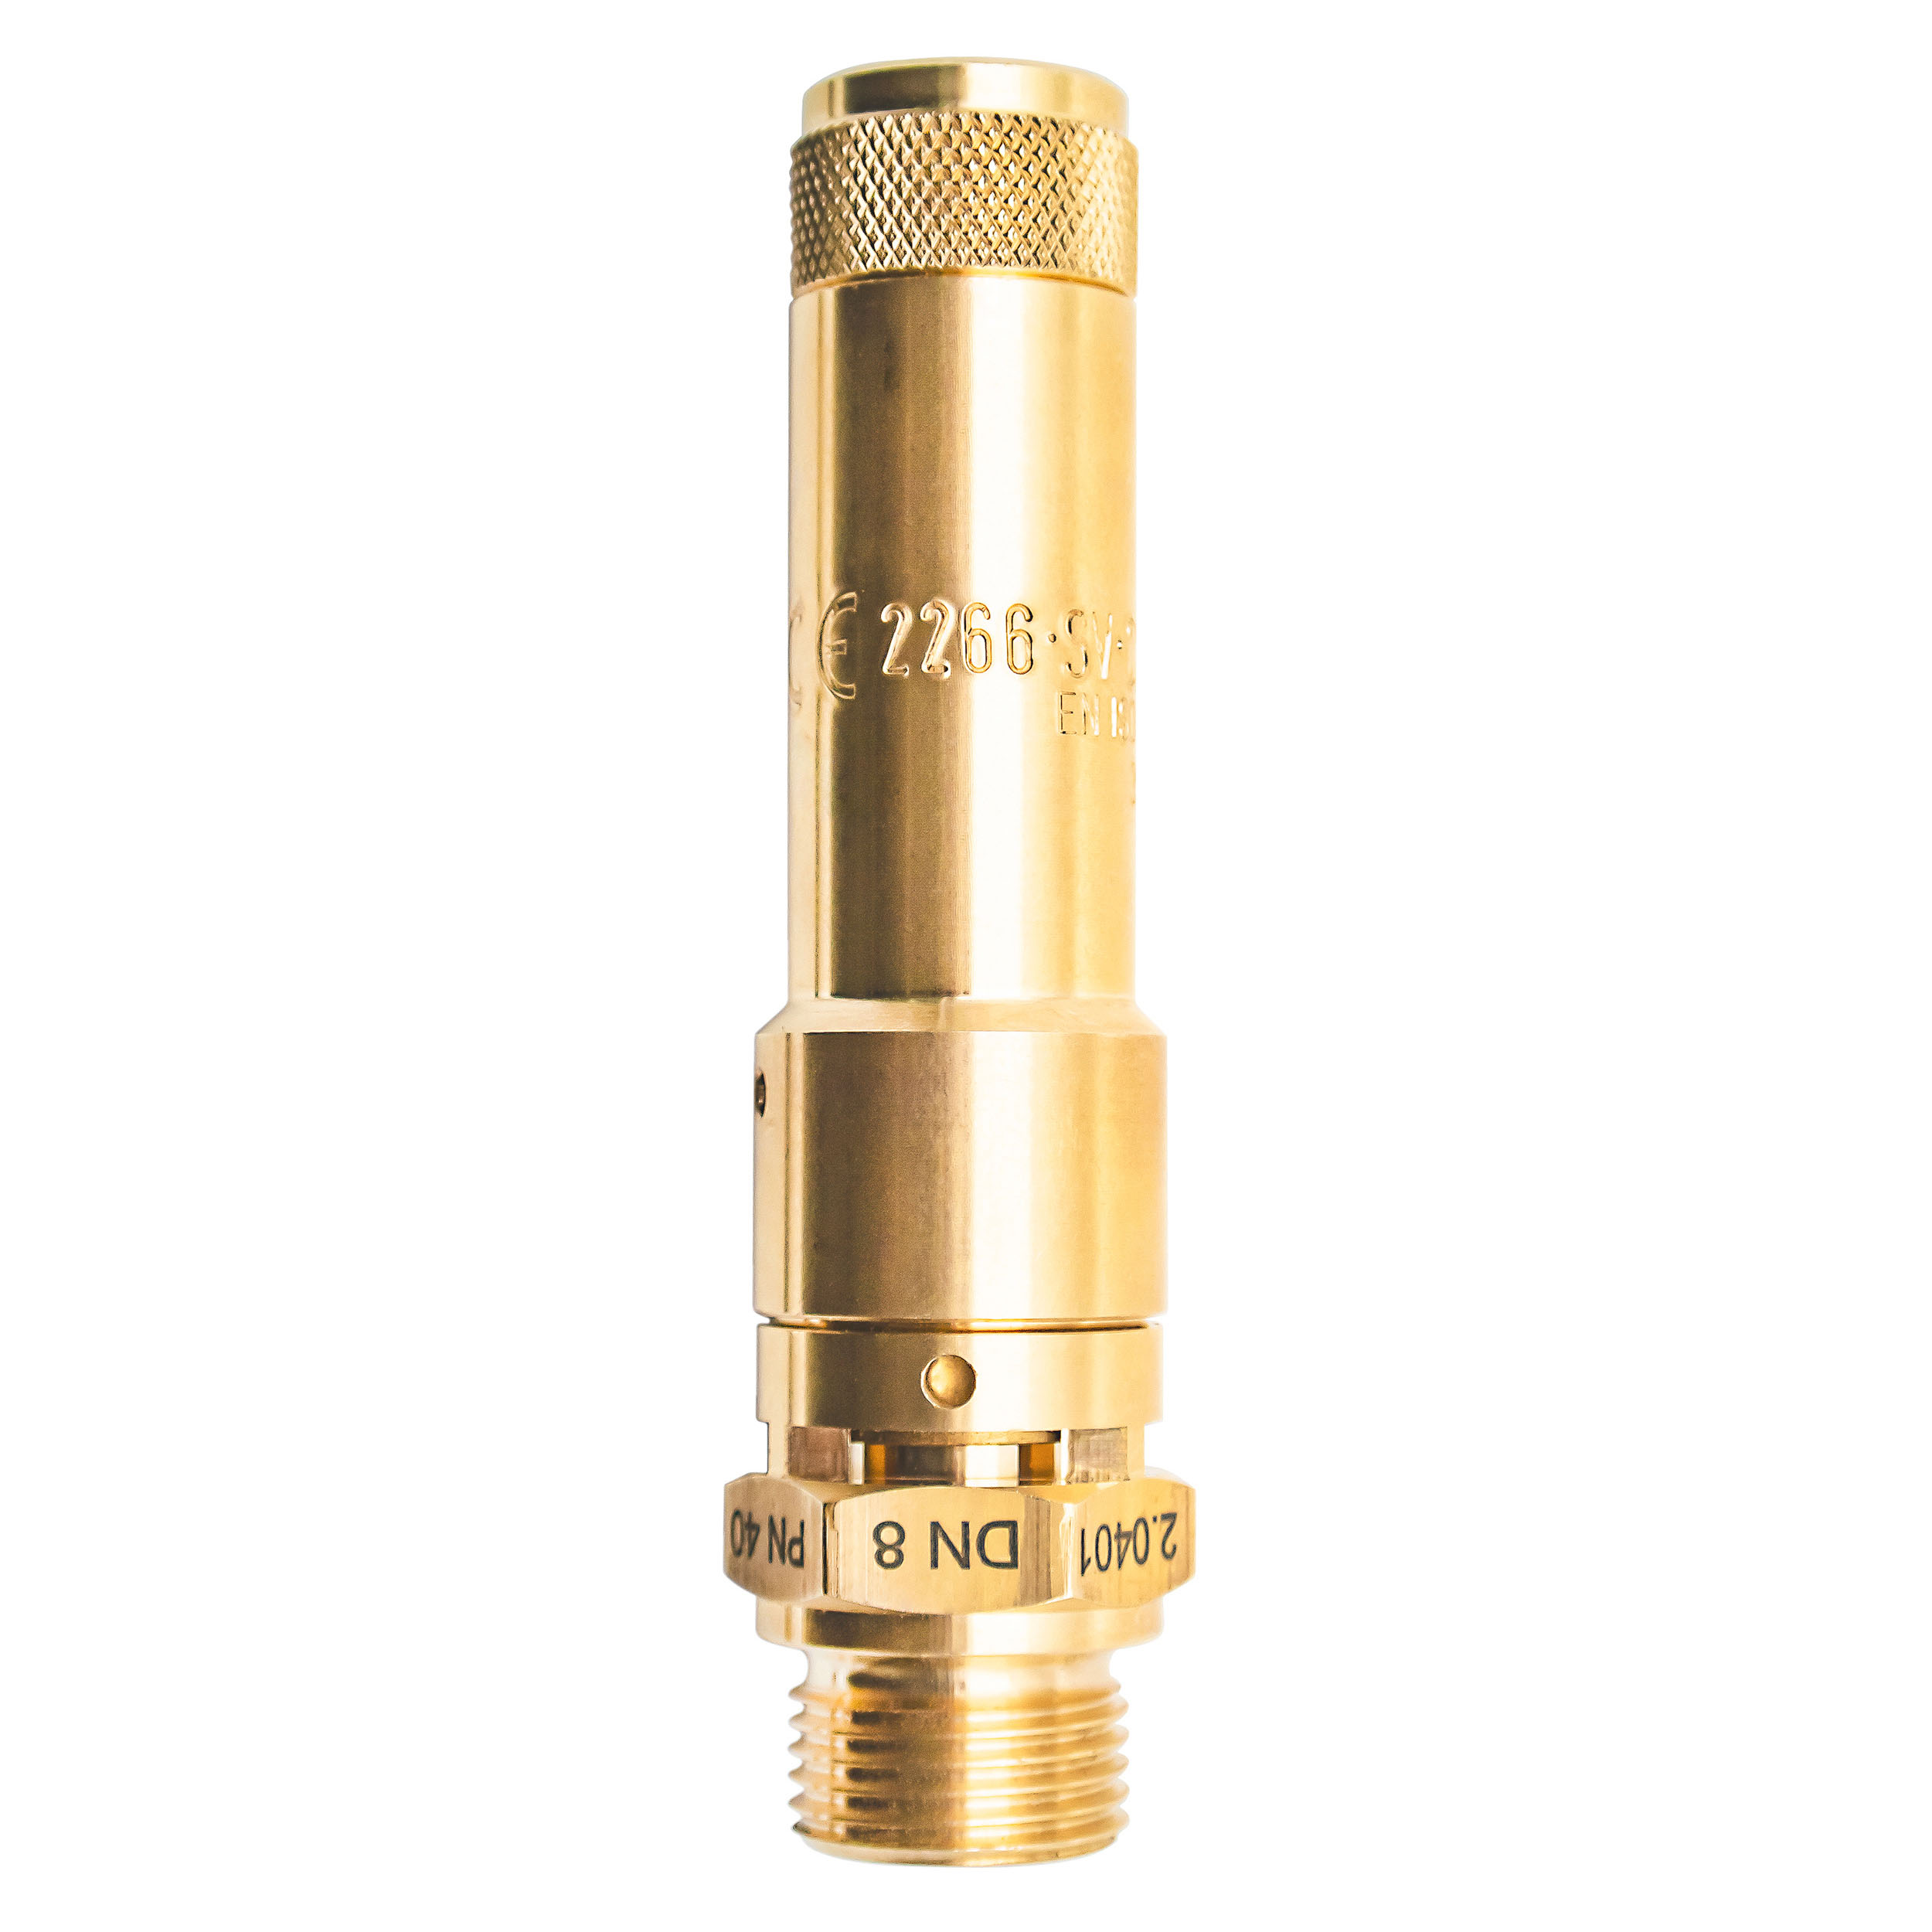 Savety valve component tested DN 8, G½, set pressure: 5.2 bar (75,4 psi)